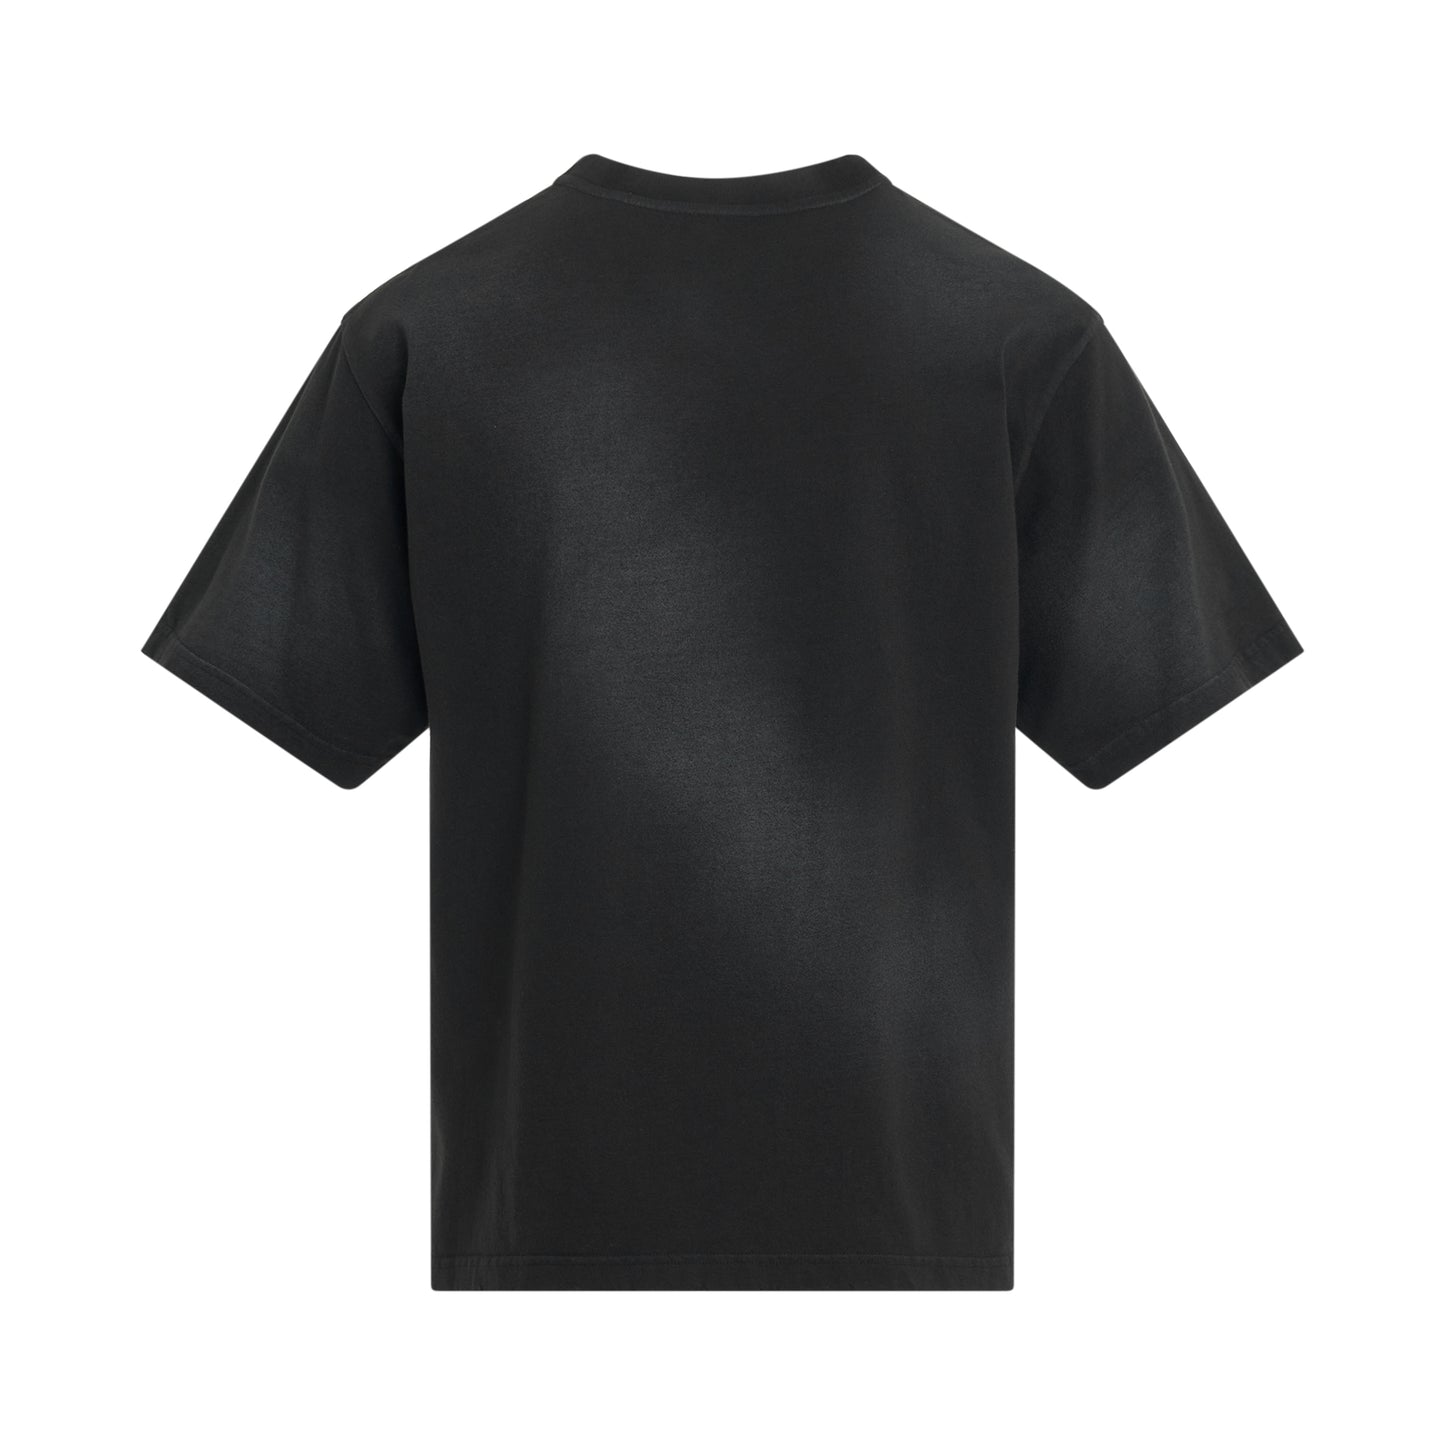 Metallic Print T-Shirt in Black